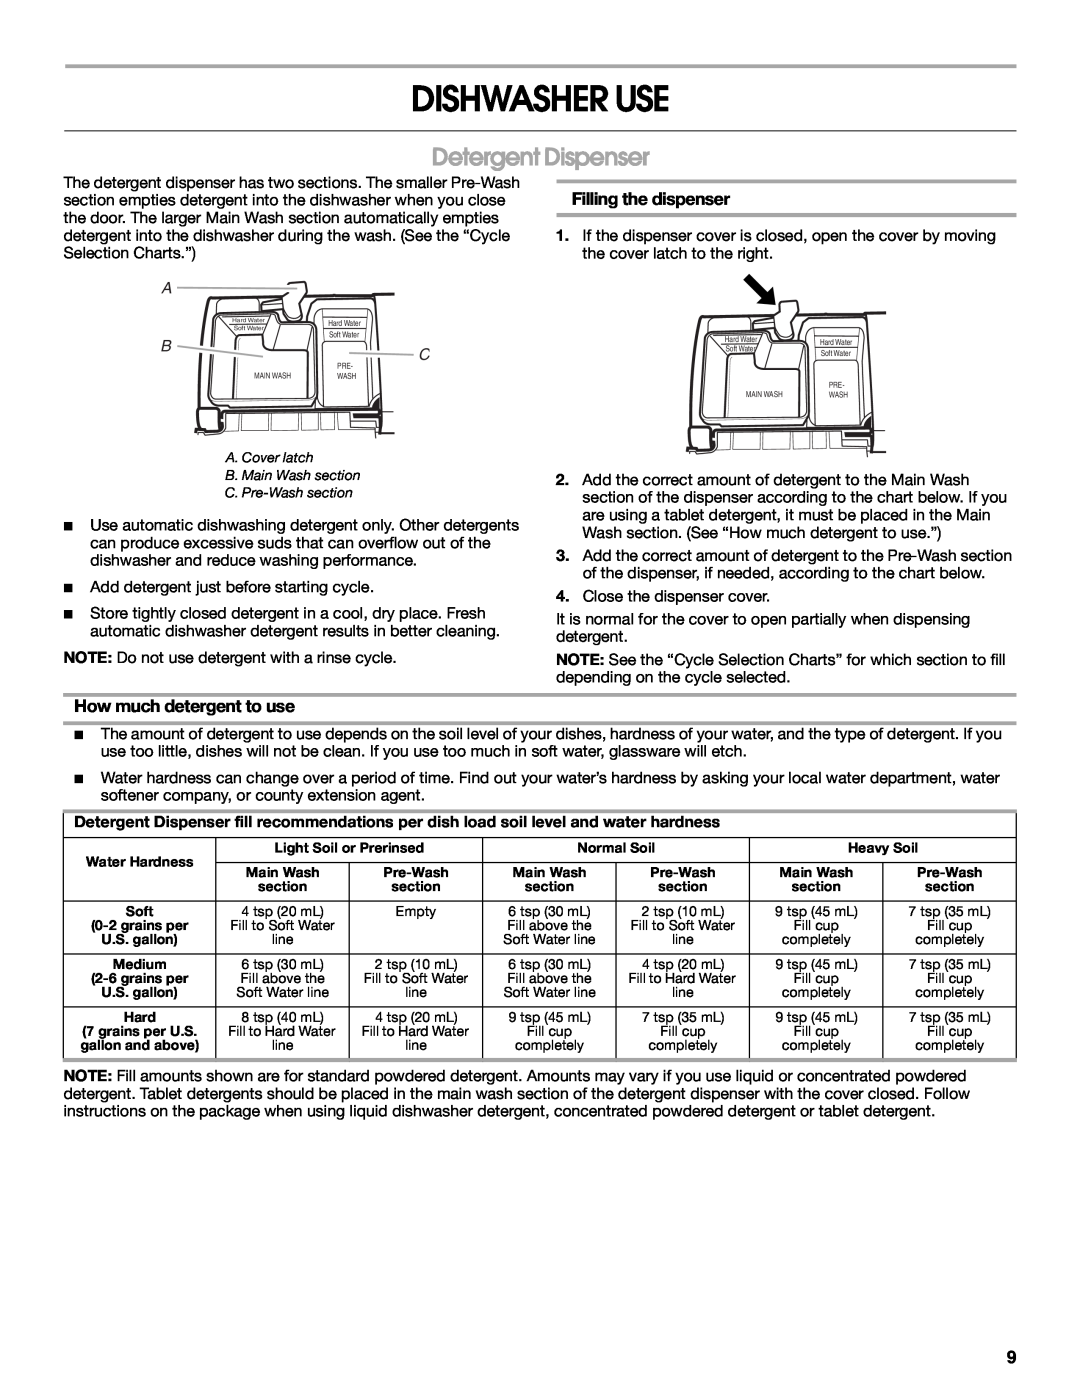 Estate TUD8700S manual Dishwasher Use, Detergent Dispenser, Filling the dispenser, How much detergent to use 